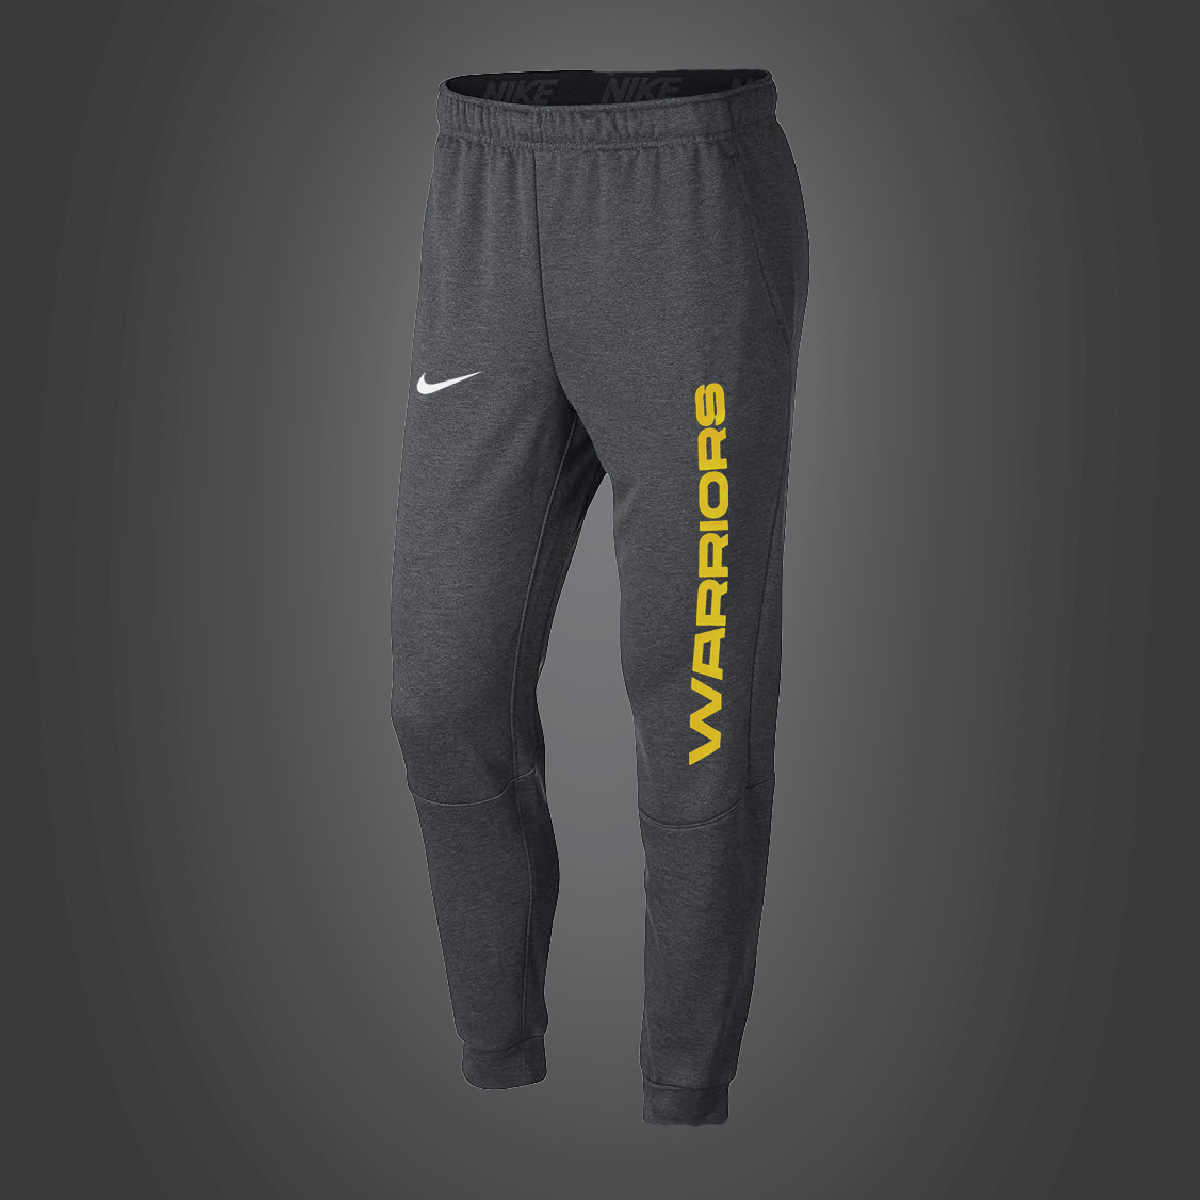 Warrior Nike Sweatpants